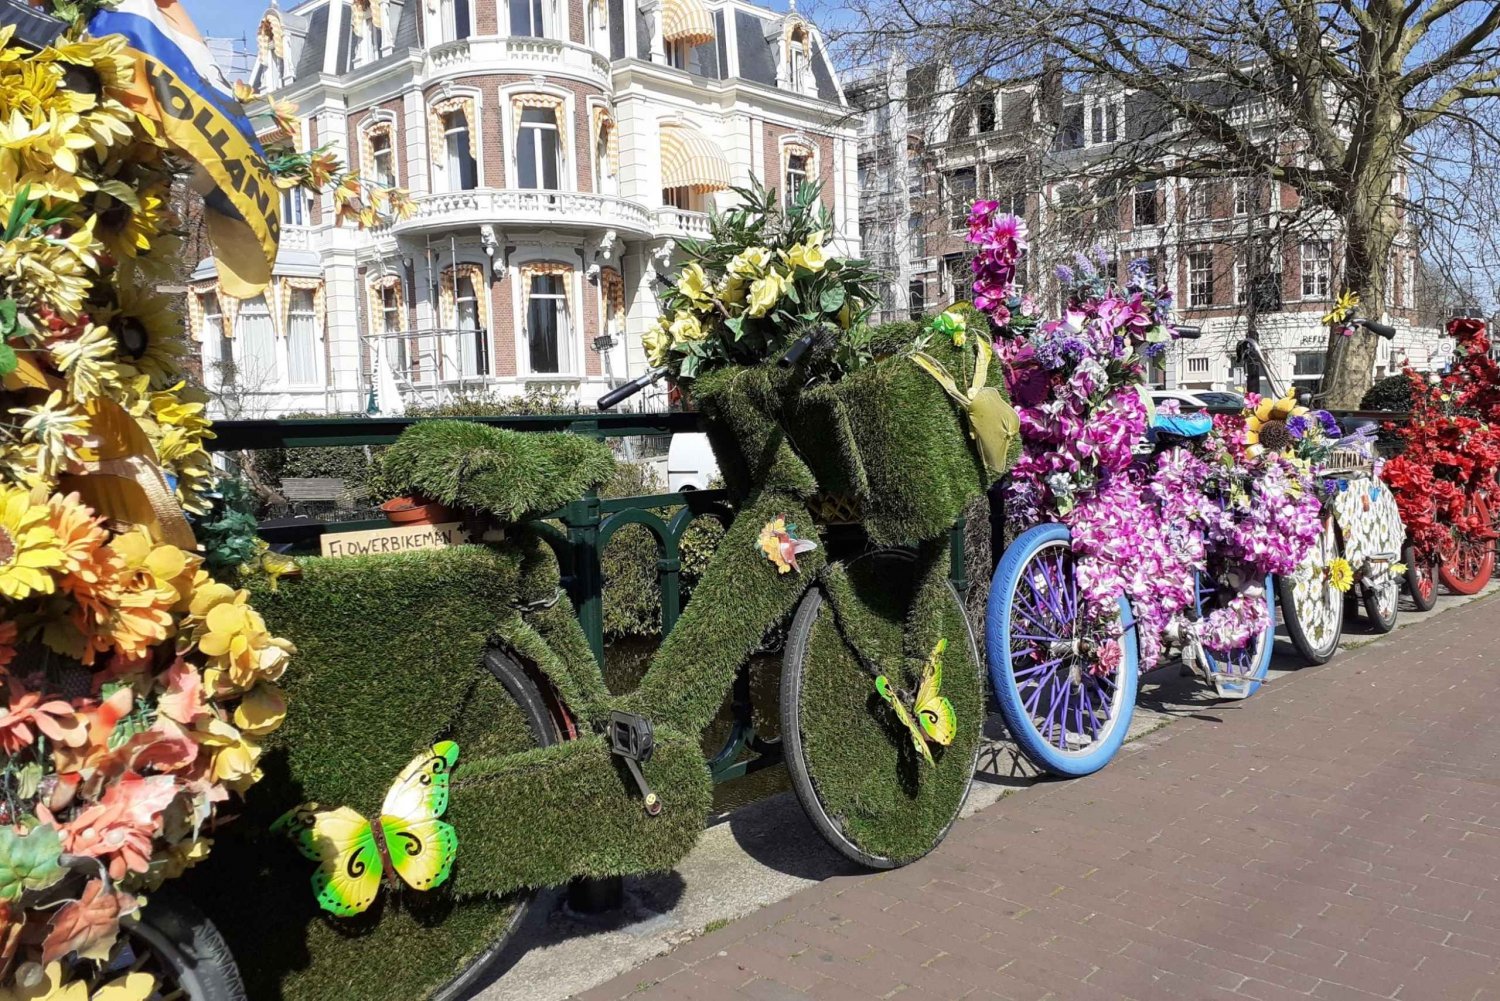 Ámsterdam: tour a pie y crucero por el canal